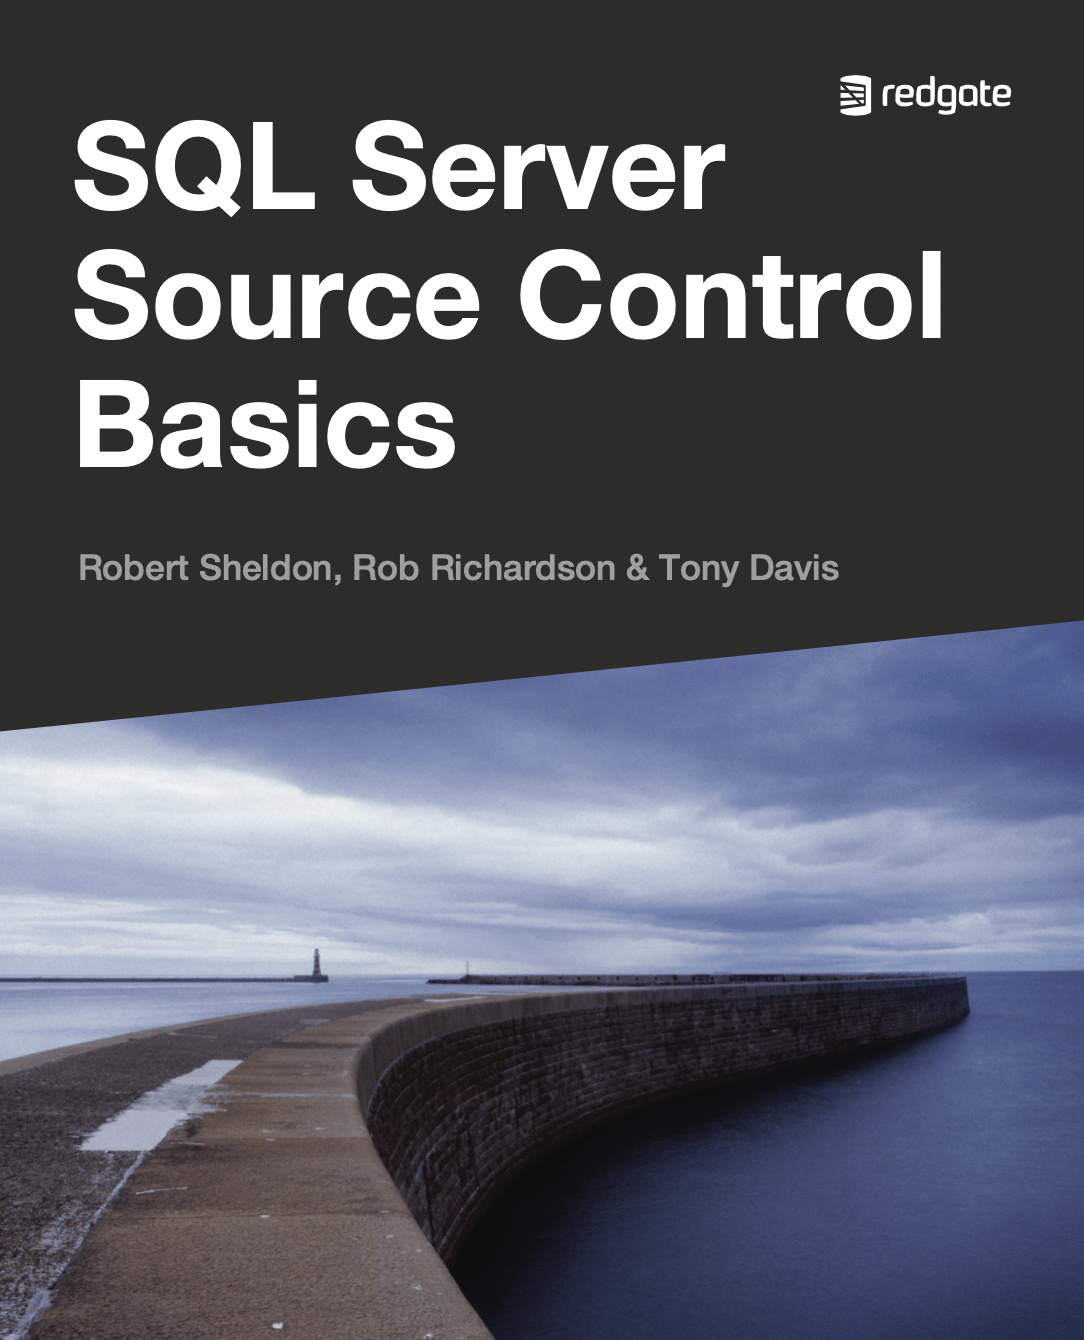 SQL Server Source Control Basics eBook cover